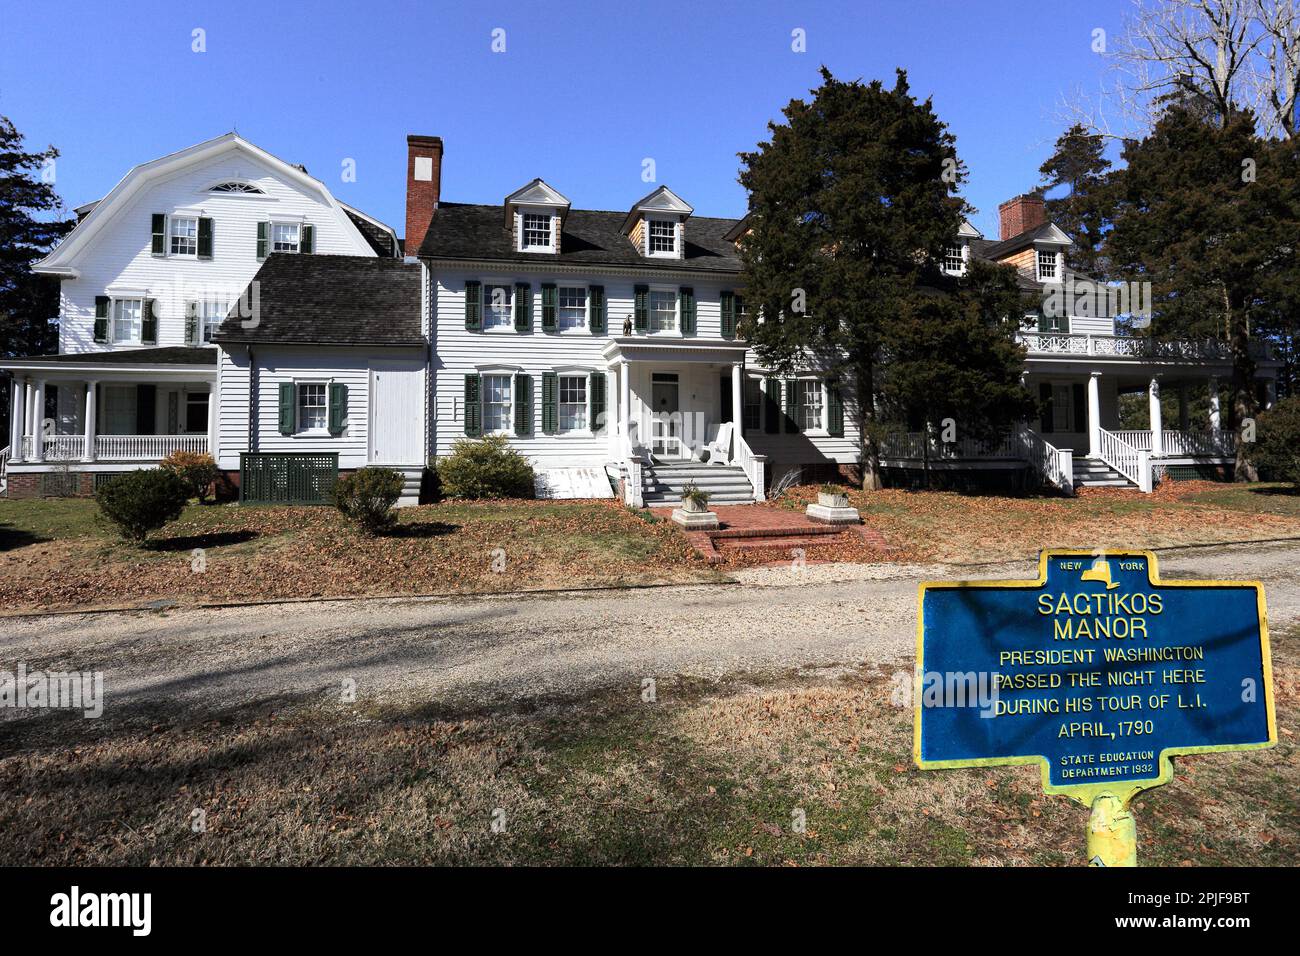 Historic Sagtikos Manor, Long Island, New York Stock Photo